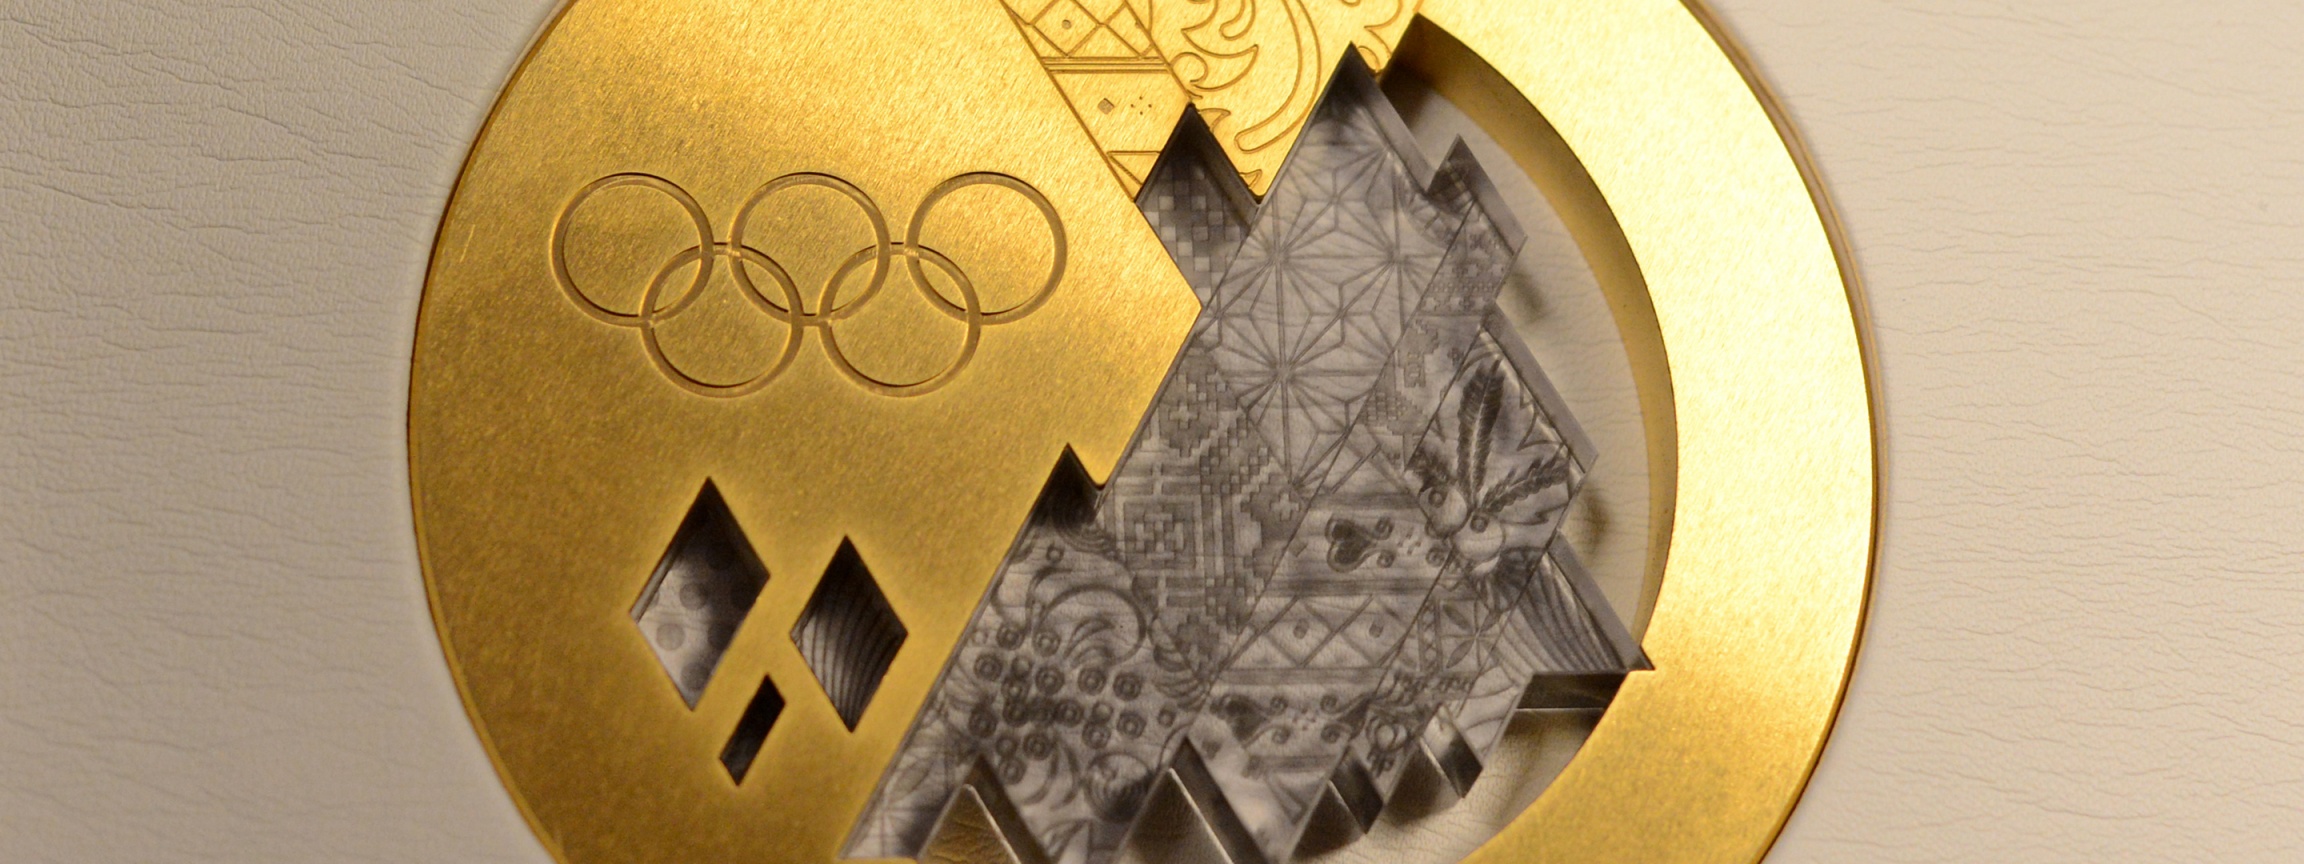 Winter Olympic Gold Medal Sochi